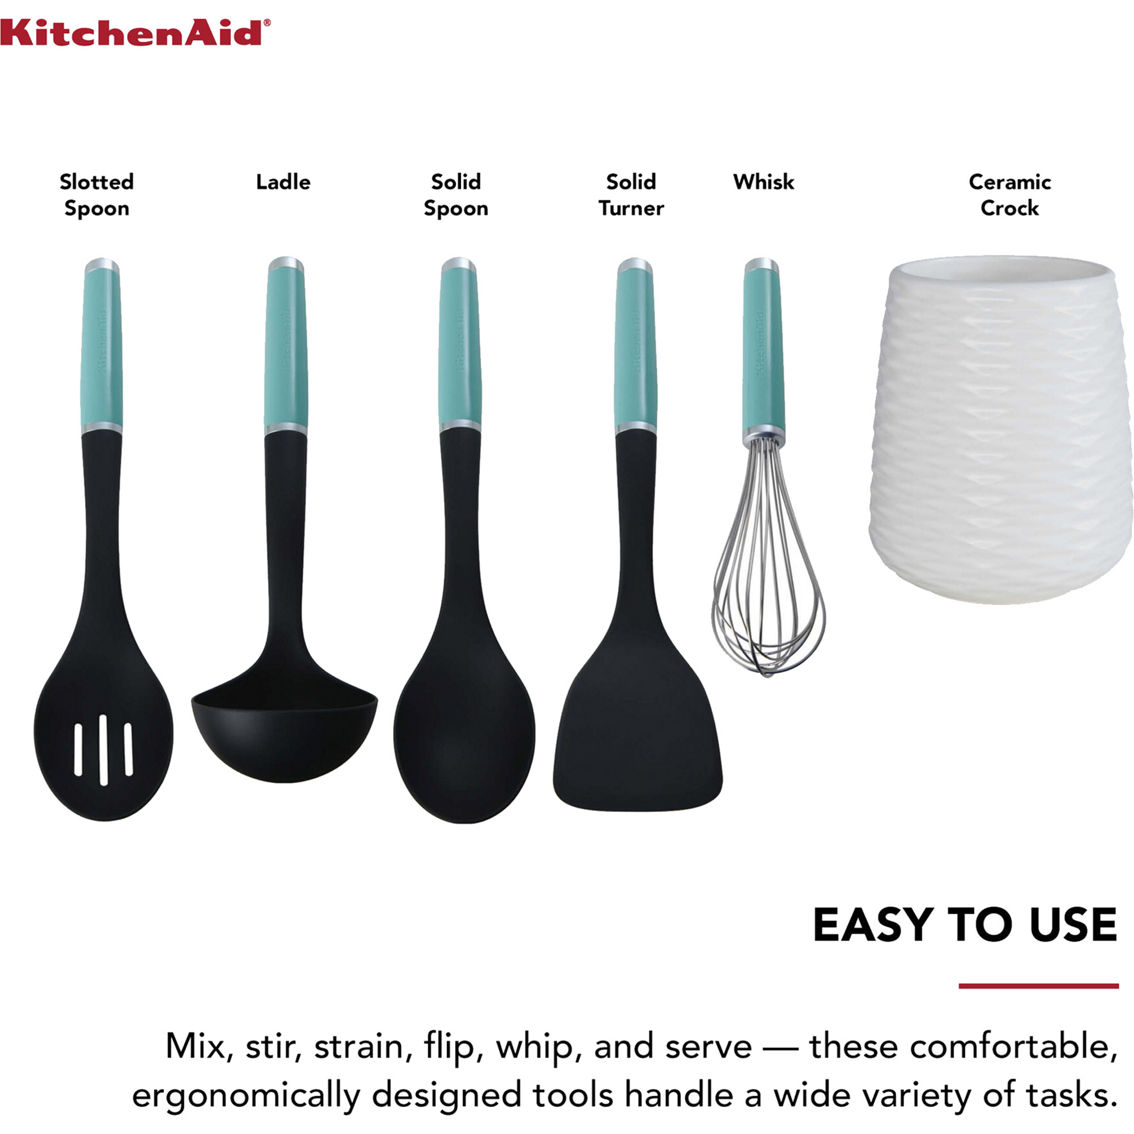 KitchenAid Ceramic Crock with Plastic Kitchen Tool 6 pc. Set - Image 2 of 2